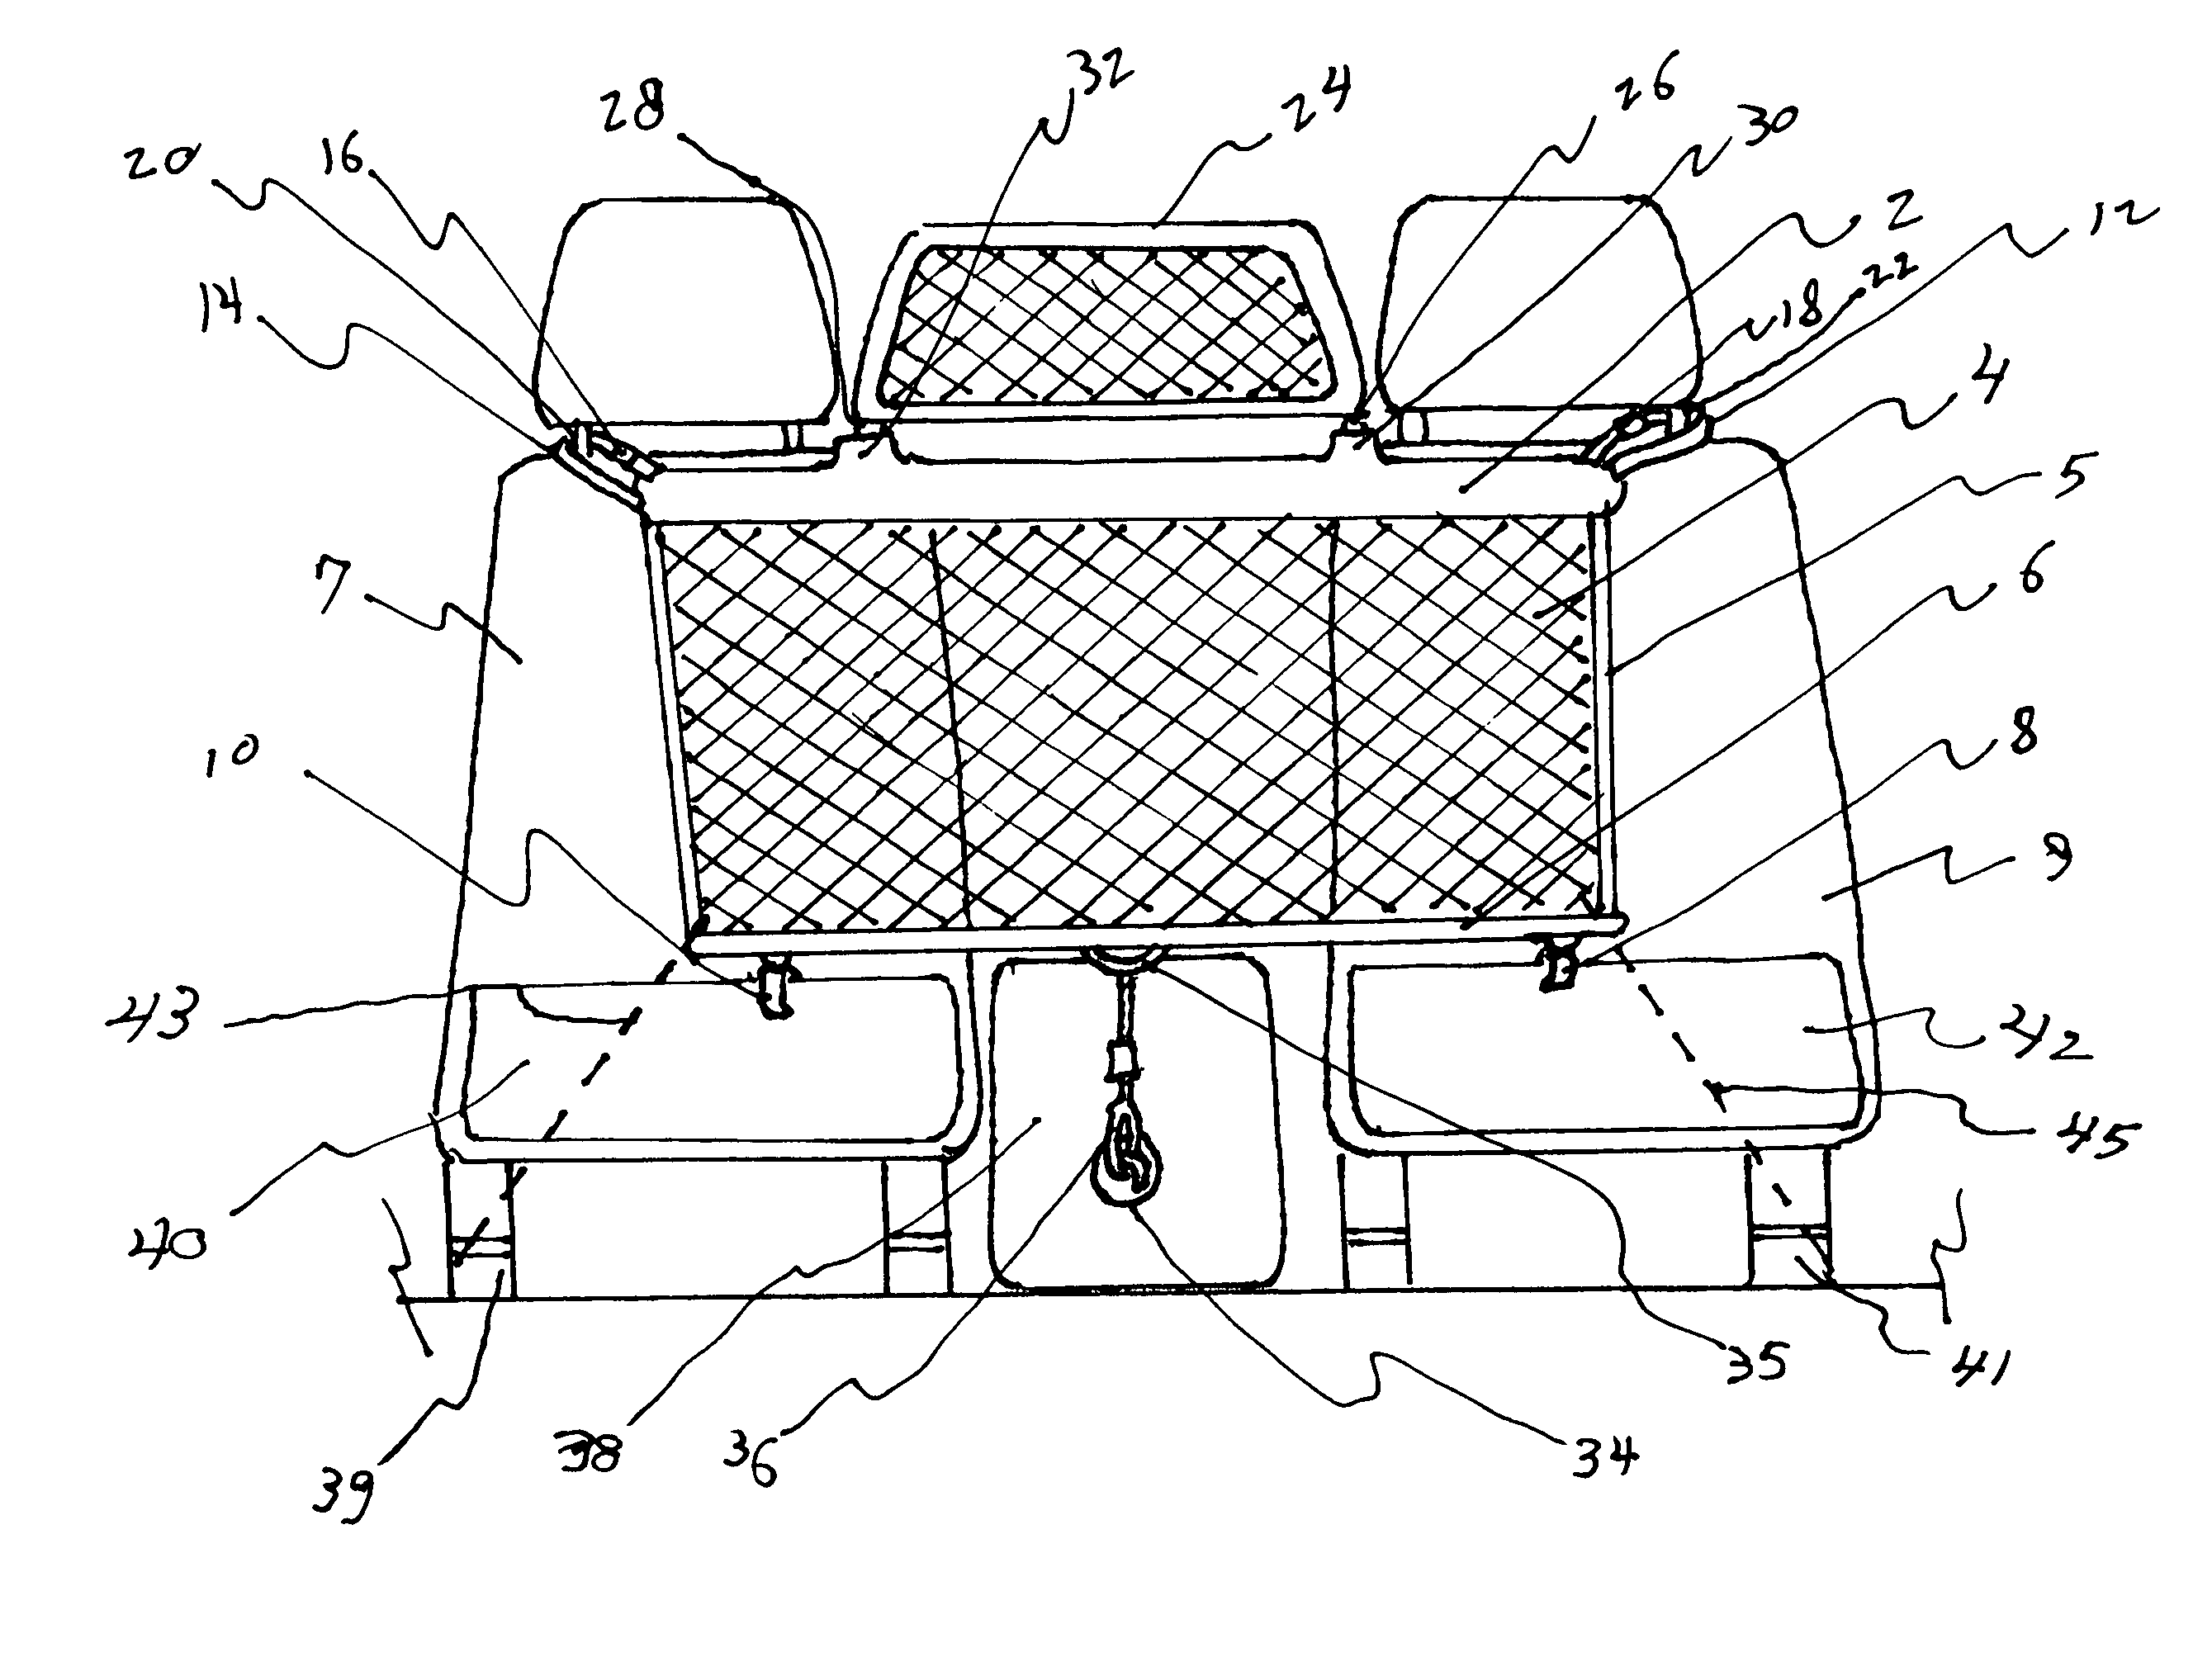 Vehicle partition